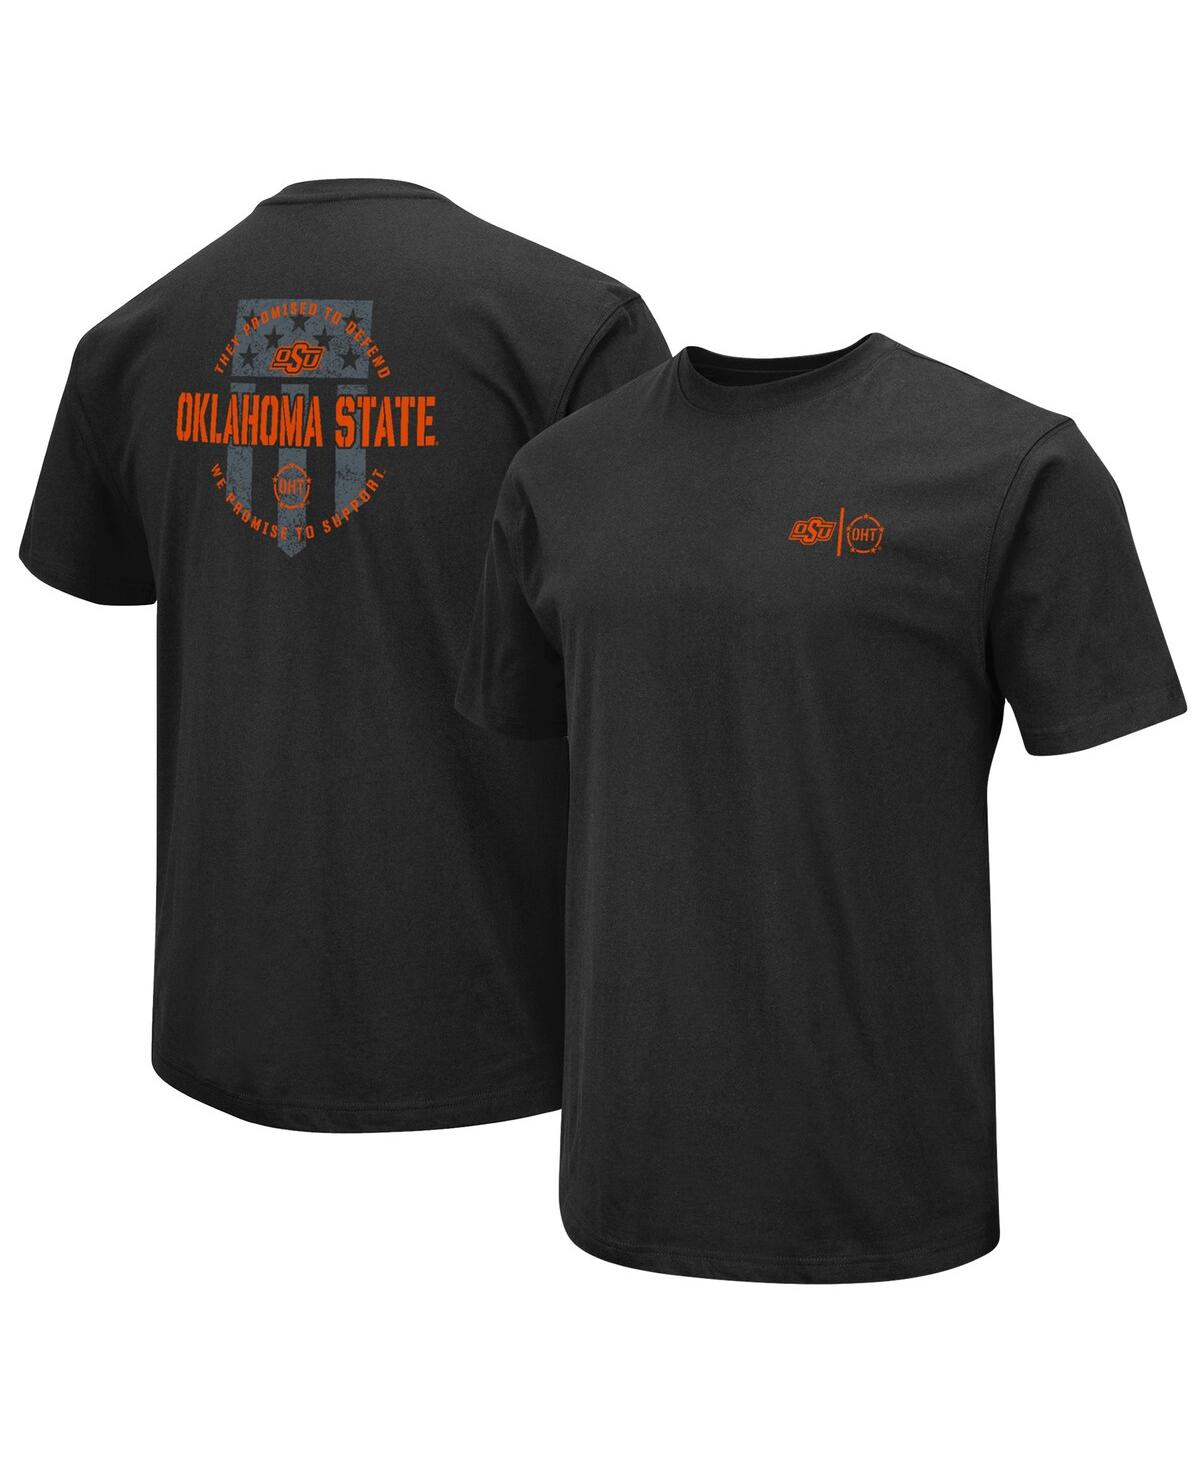 Colosseum Men's  Black Oklahoma State Cowboys Oht Military-inspired Appreciation T-shirt